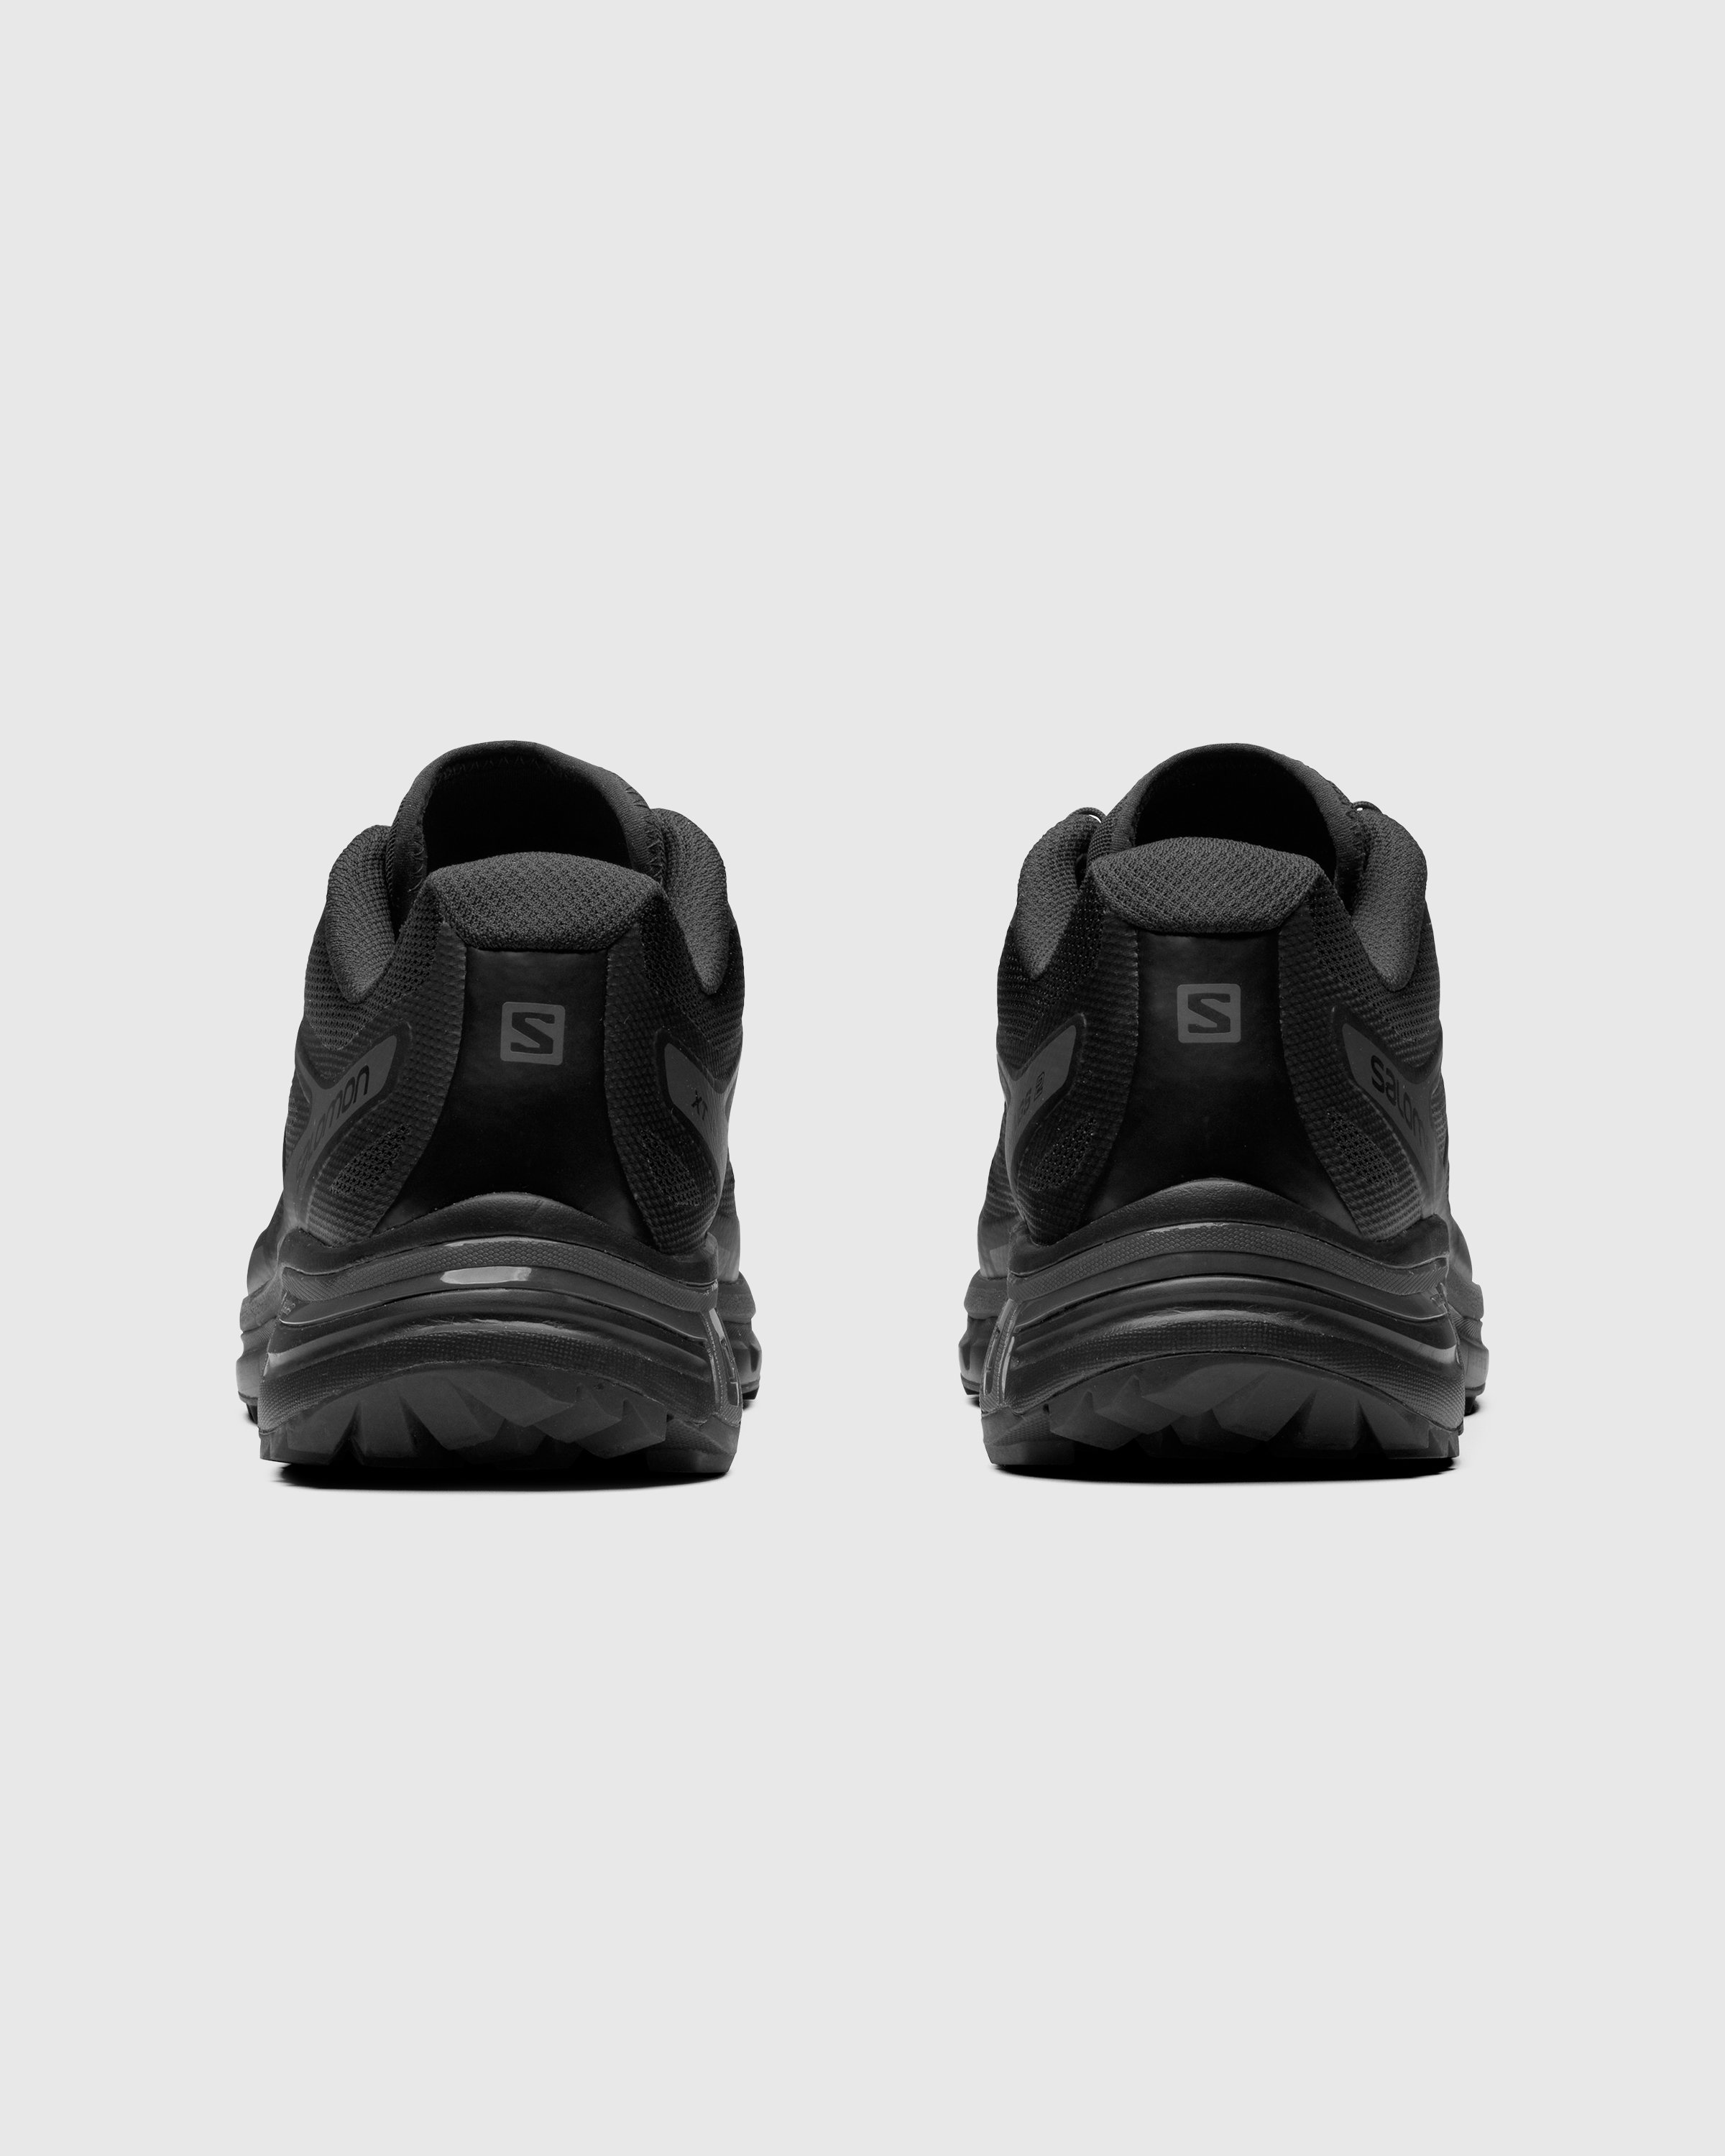 Salomon - XT-Wings 2 Advanced Black/Black/Magnet - Footwear - Black - Image 4